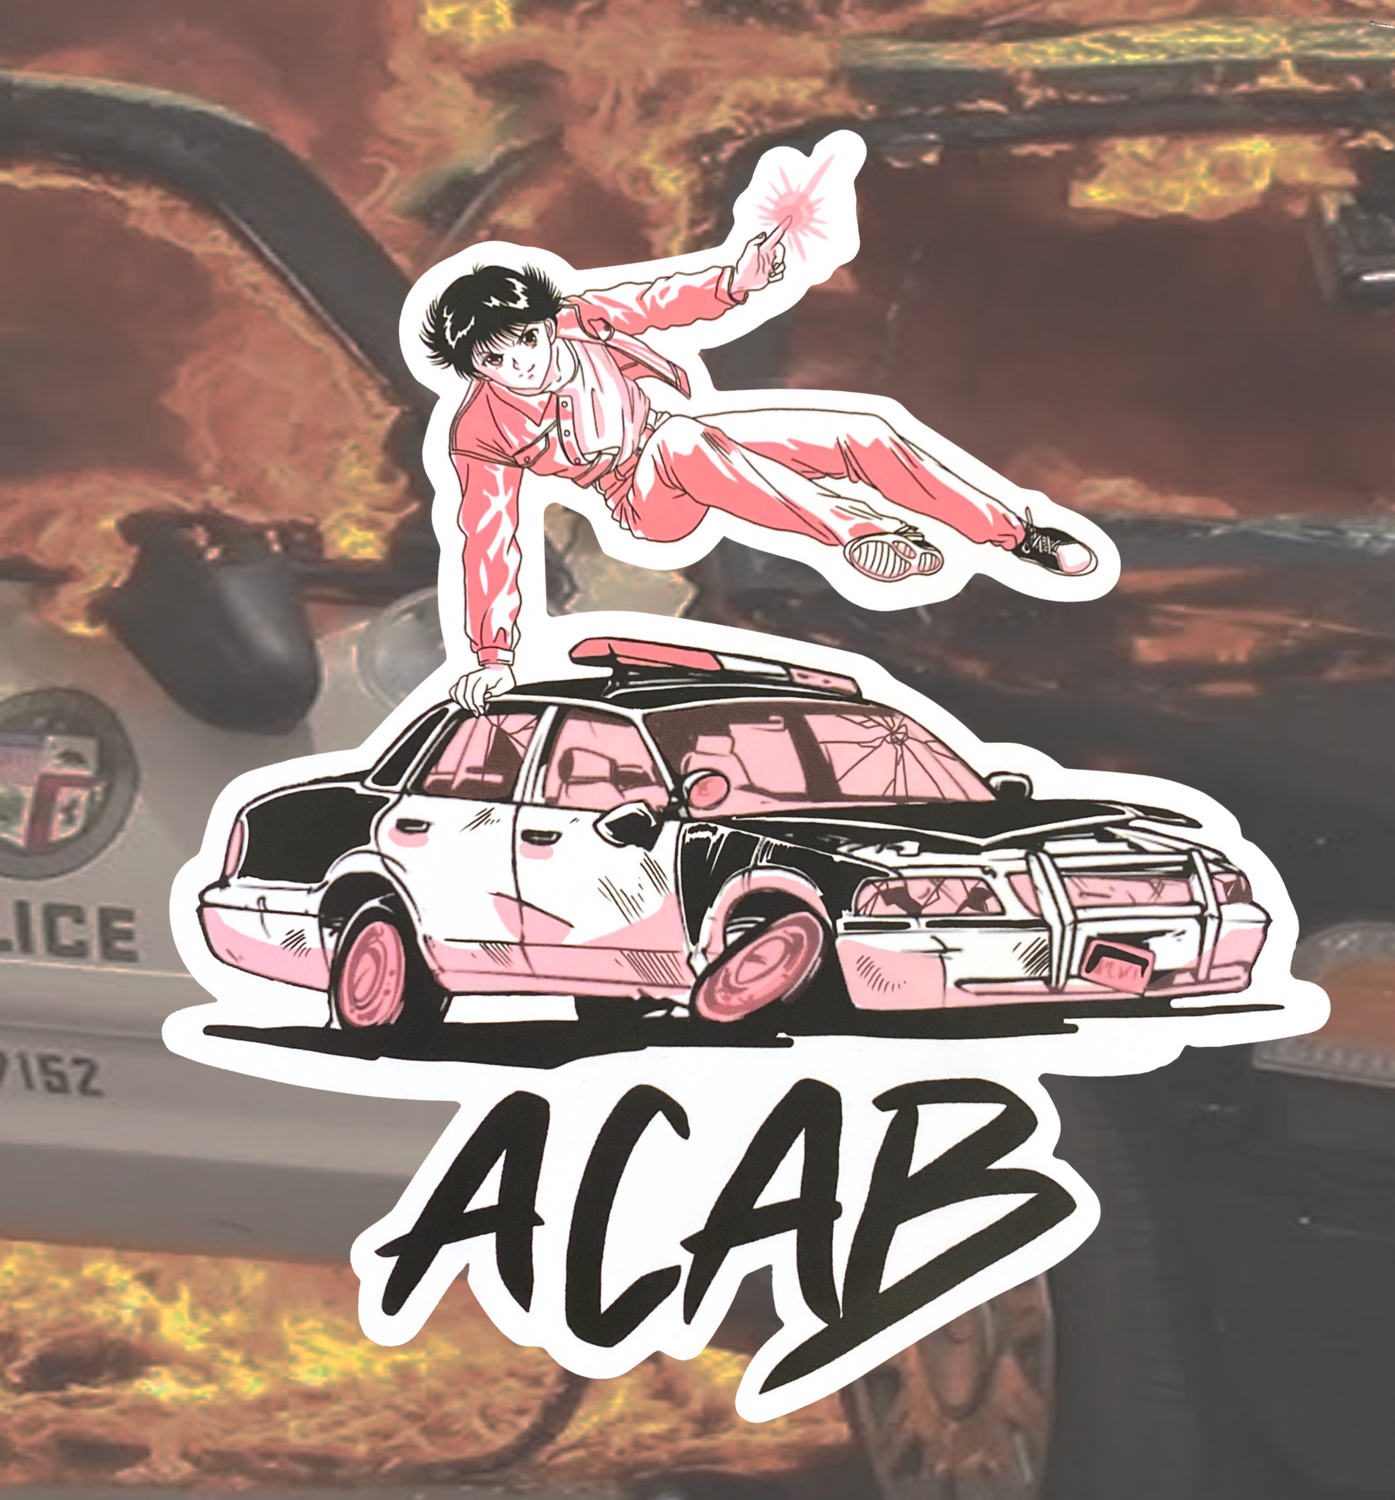 Yusuke ACAB - Sticker by Tina Lugo